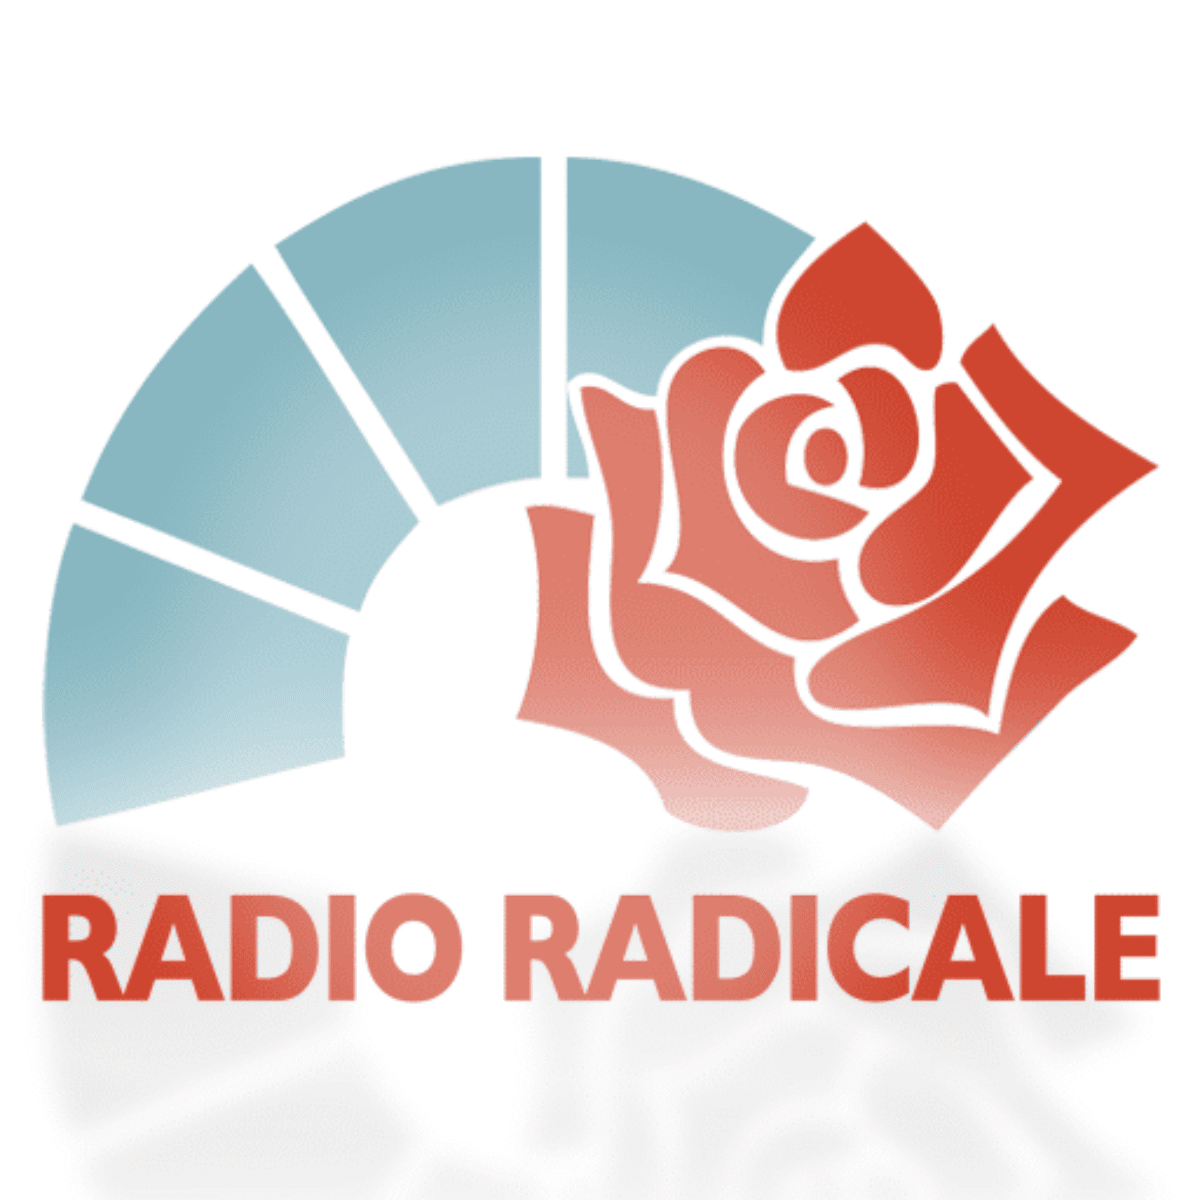 chiusura radio radicale ricorso lega